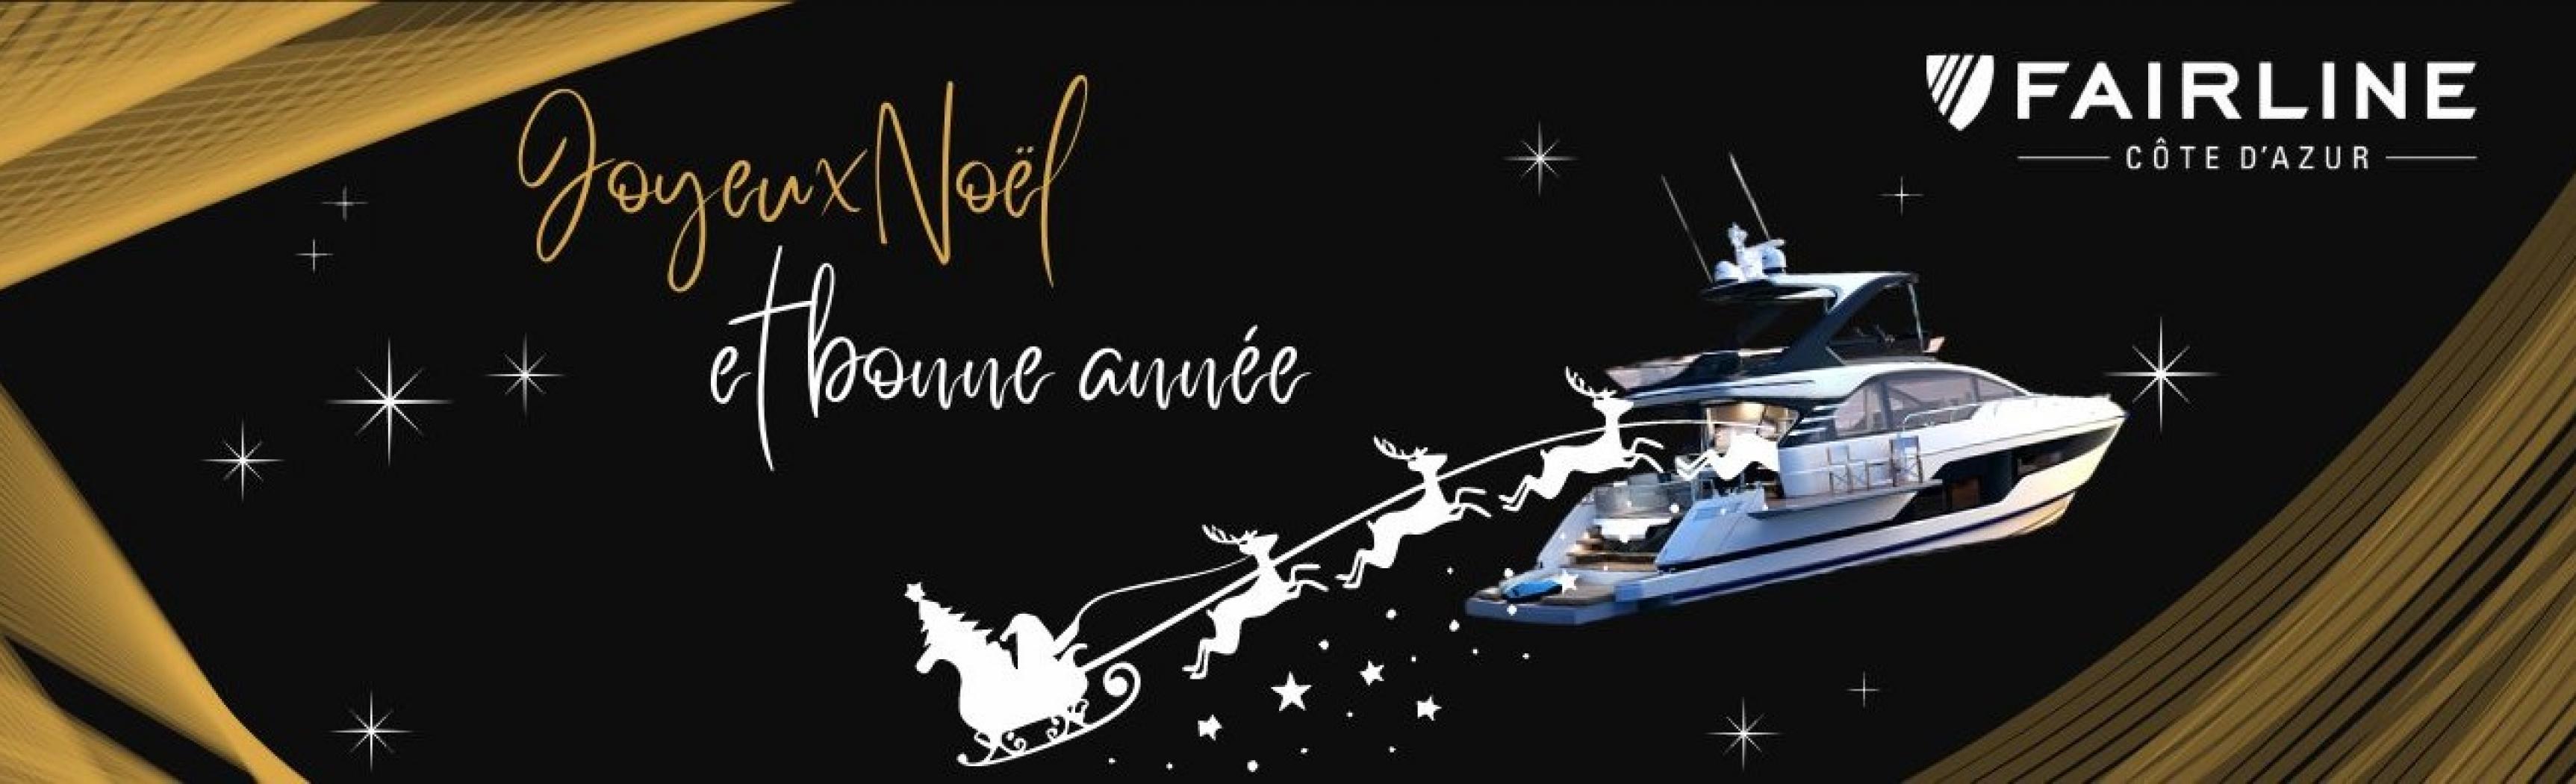 Celebrate the magic festive season with Fairline Côte d'Azur